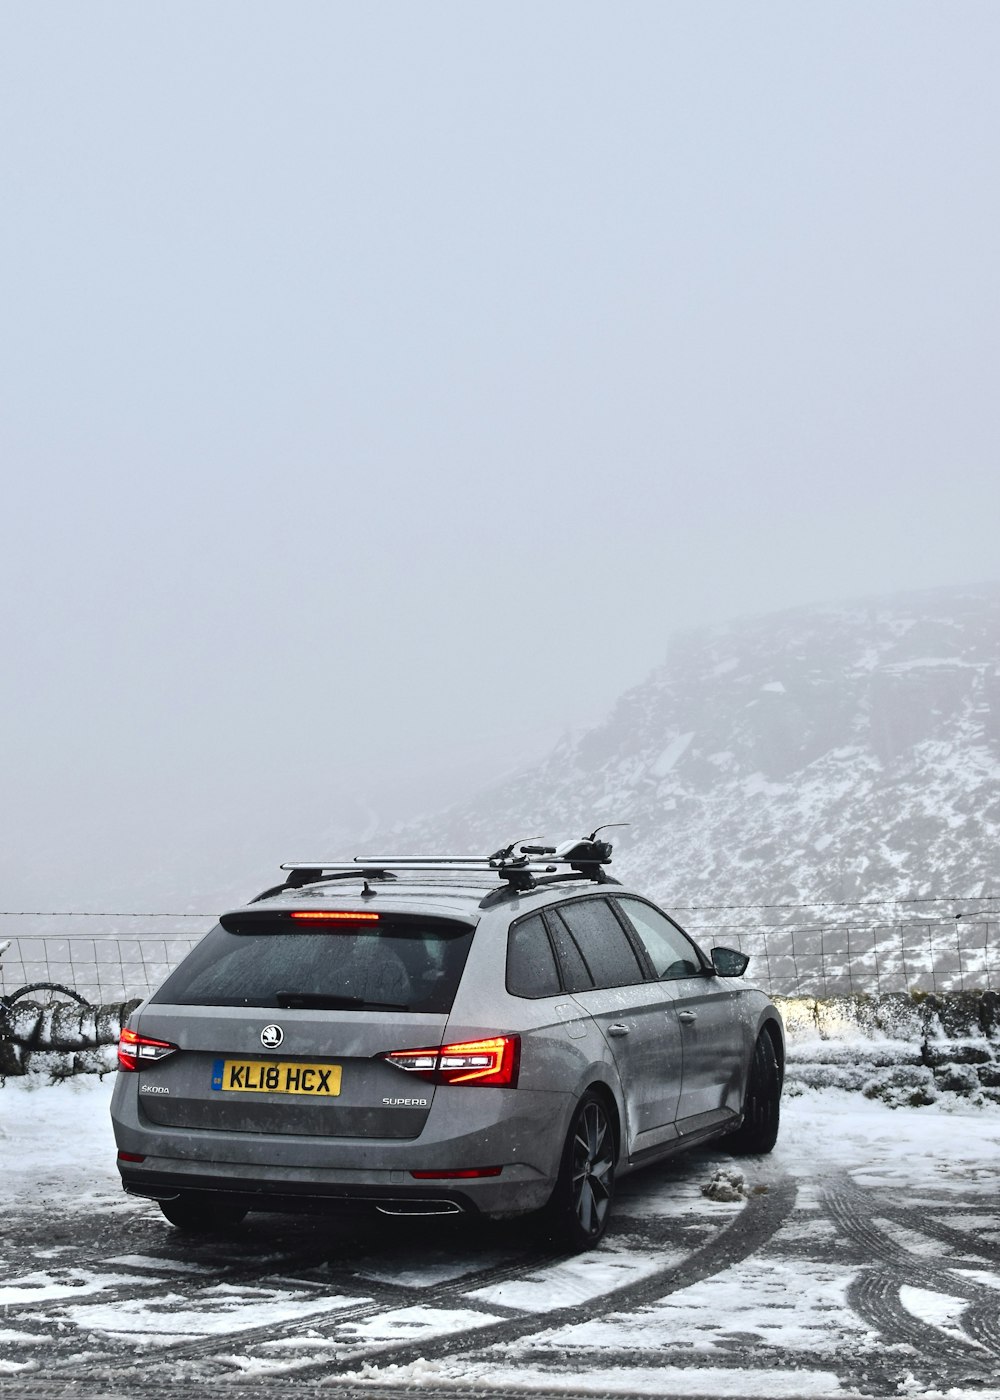 black honda car on snow covered ground during daytime